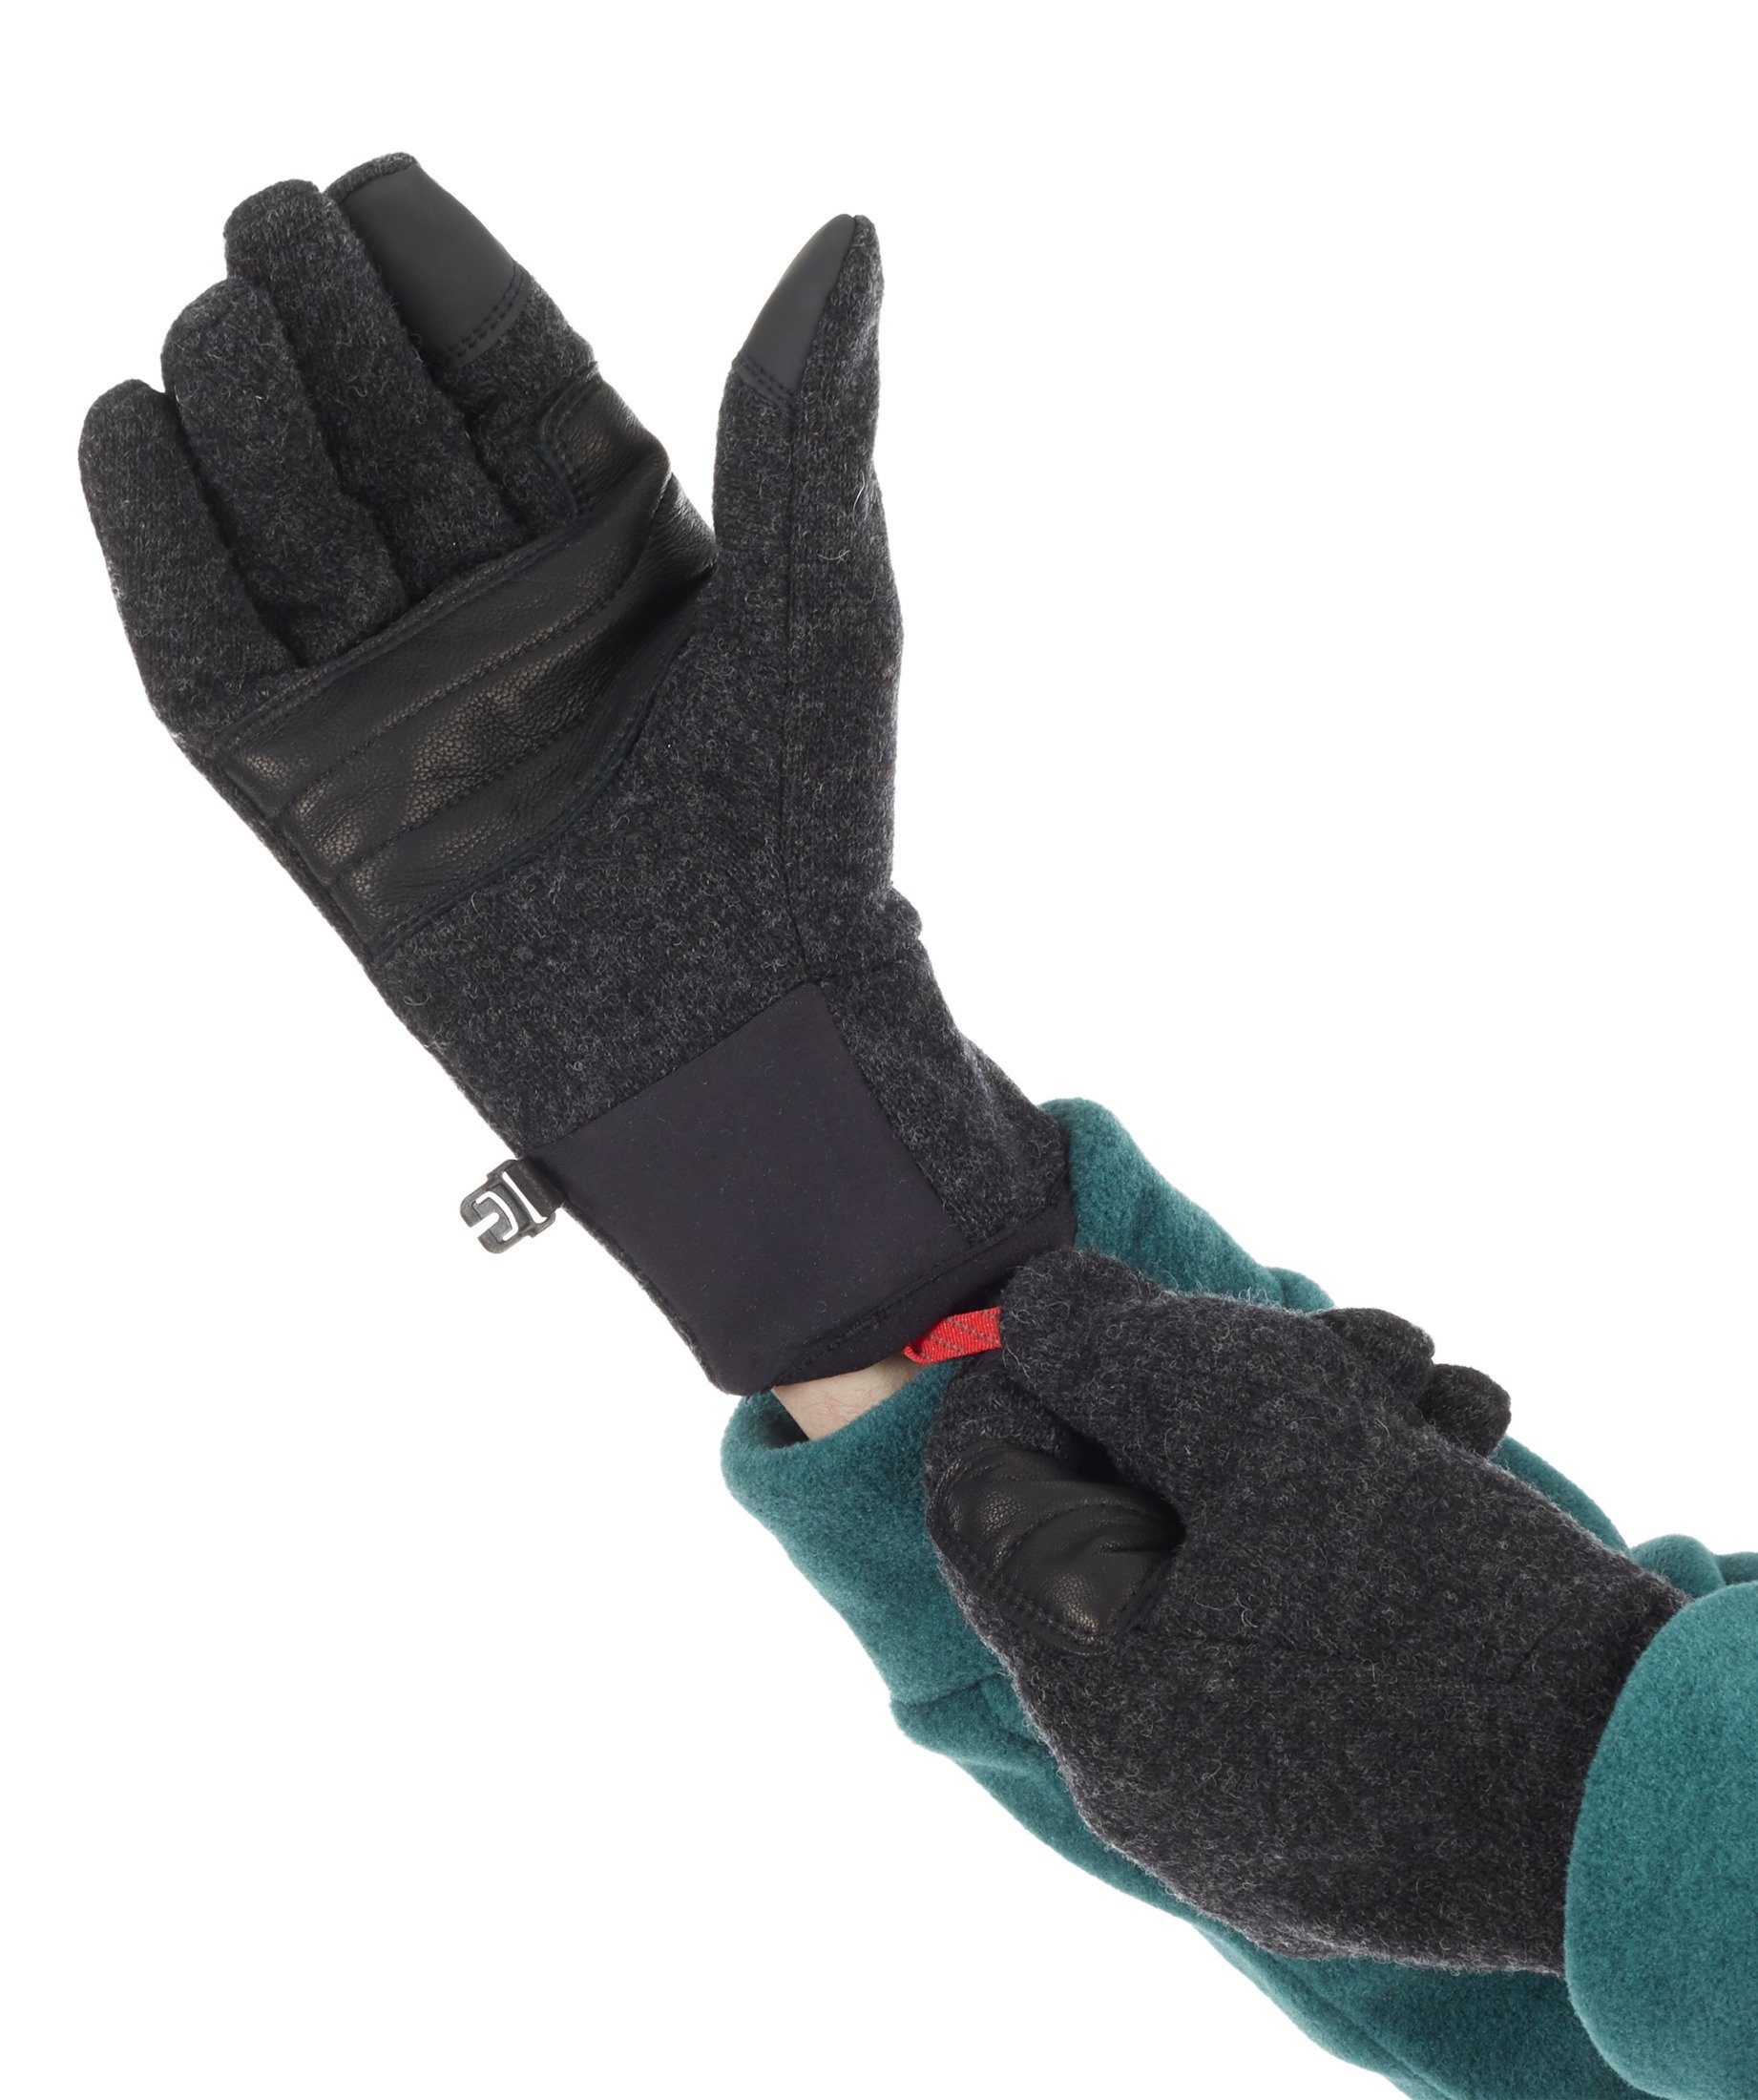 Mammut Multisporthandschuhe Passion Glove Passion mélange black Glove